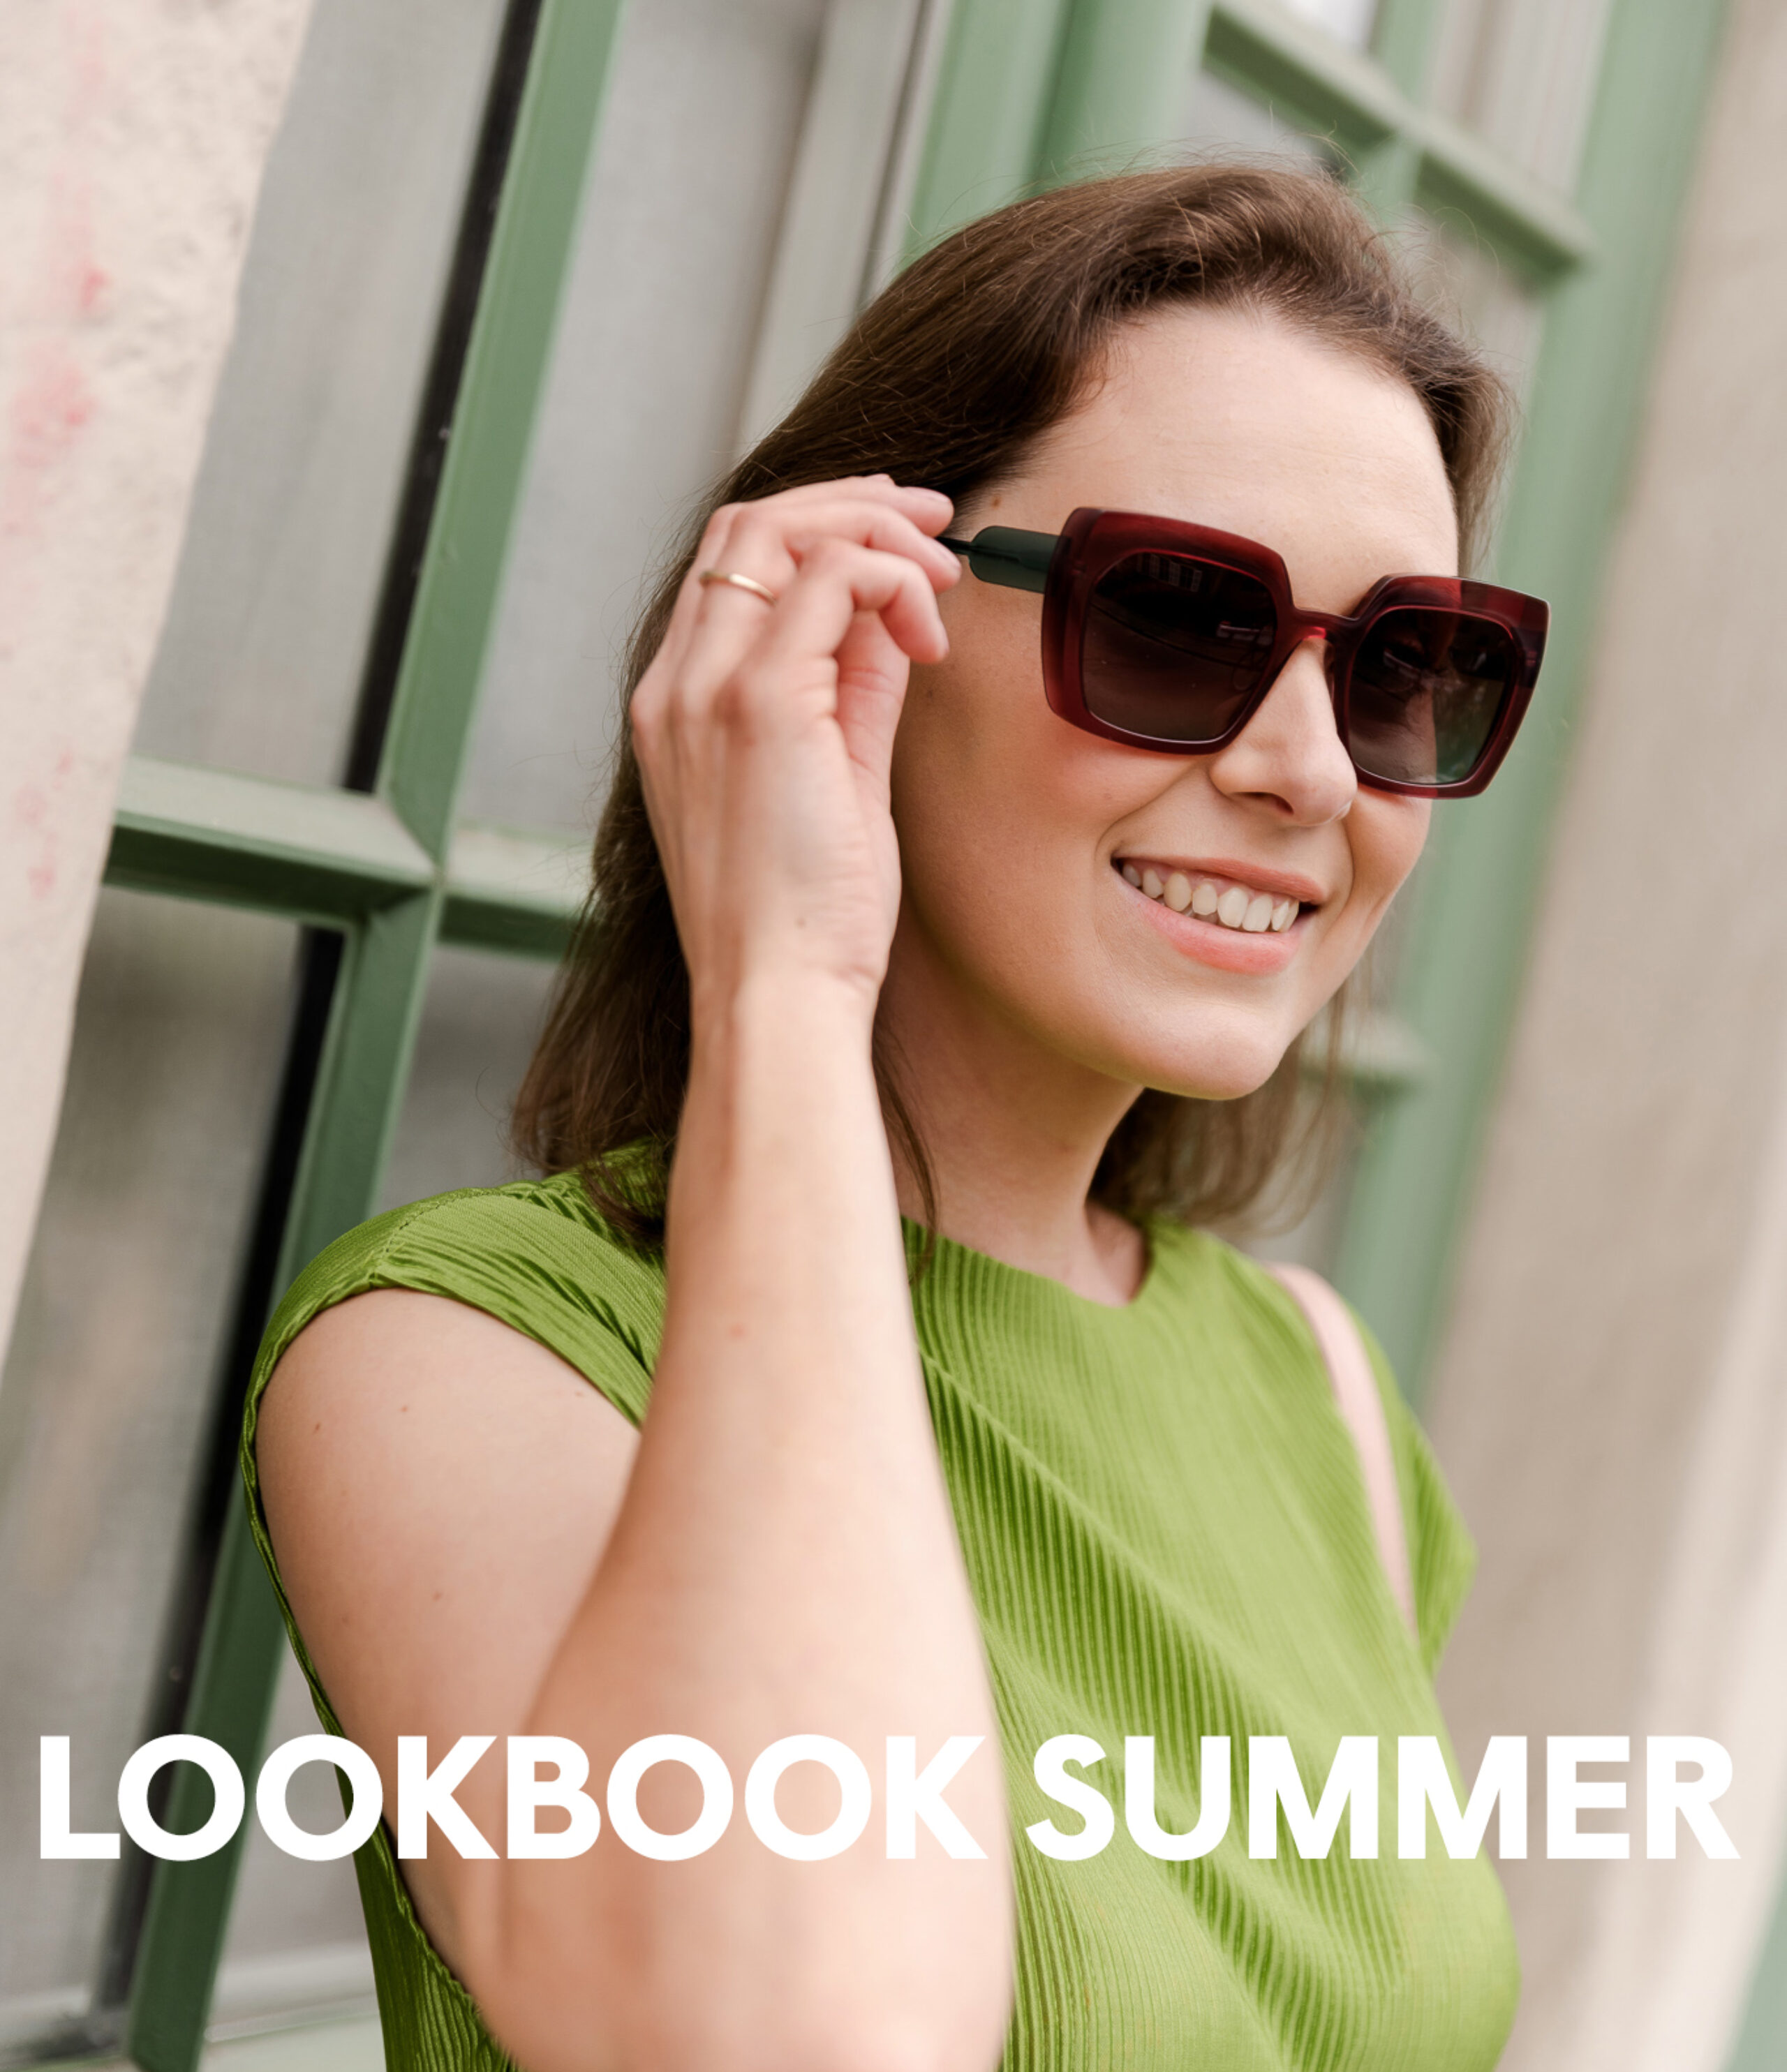 Lookbook summer 2023 %%sep%% Frames and Faces %%sep%% Deinze